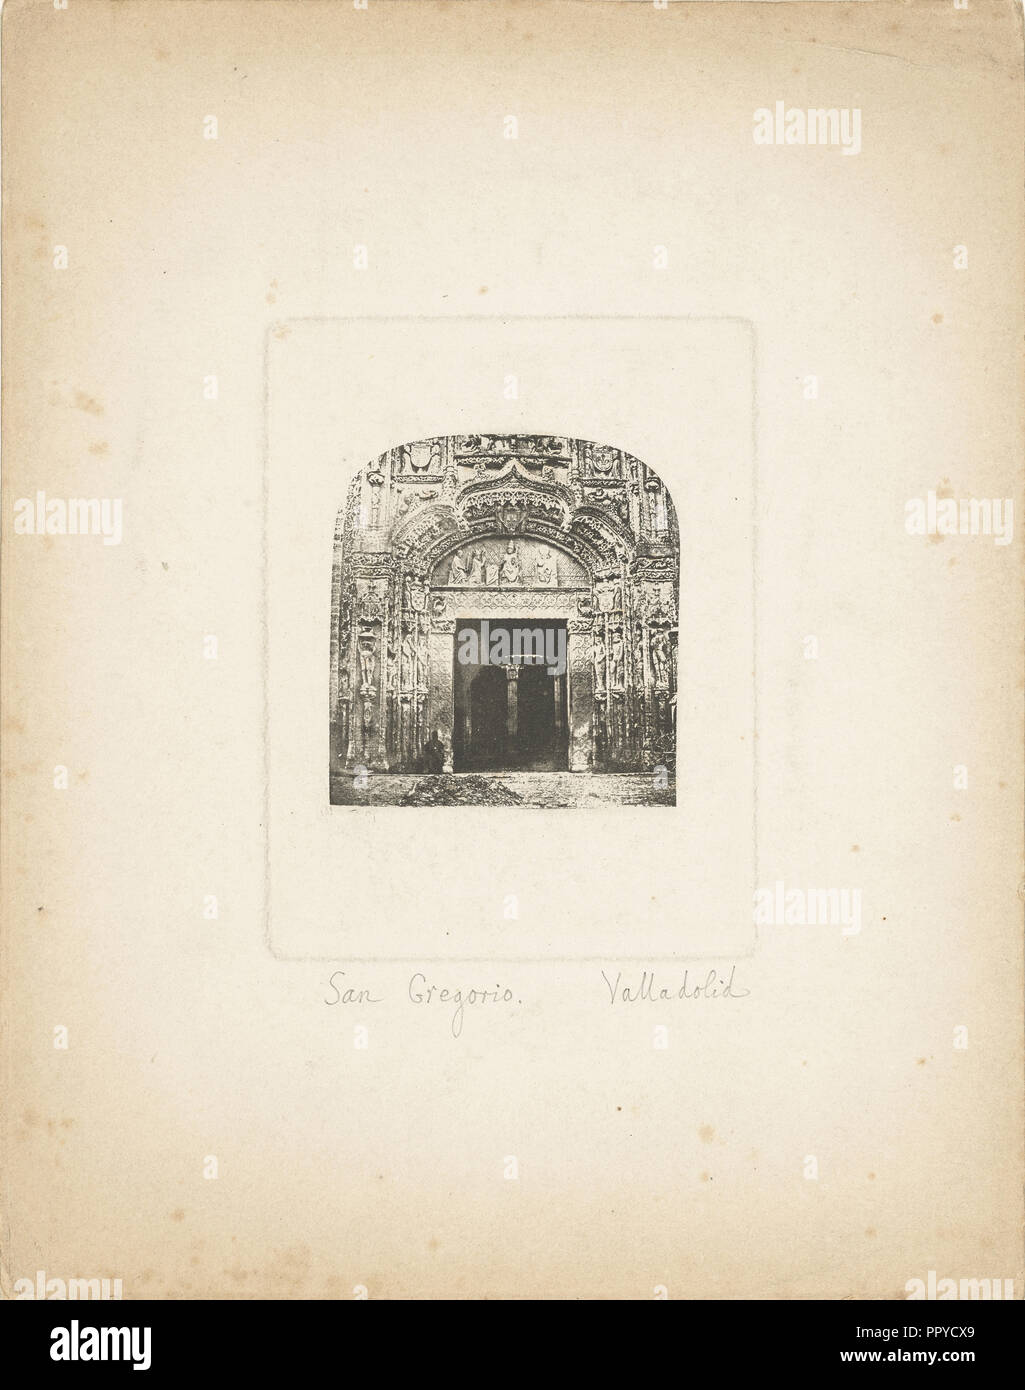 San Gregorio Valladolid; William Henry Fox Talbot, English, 1800 - 1877, June 30, 1858; Photoglyphic engraving; 7.5 × 7 cm Stock Photo